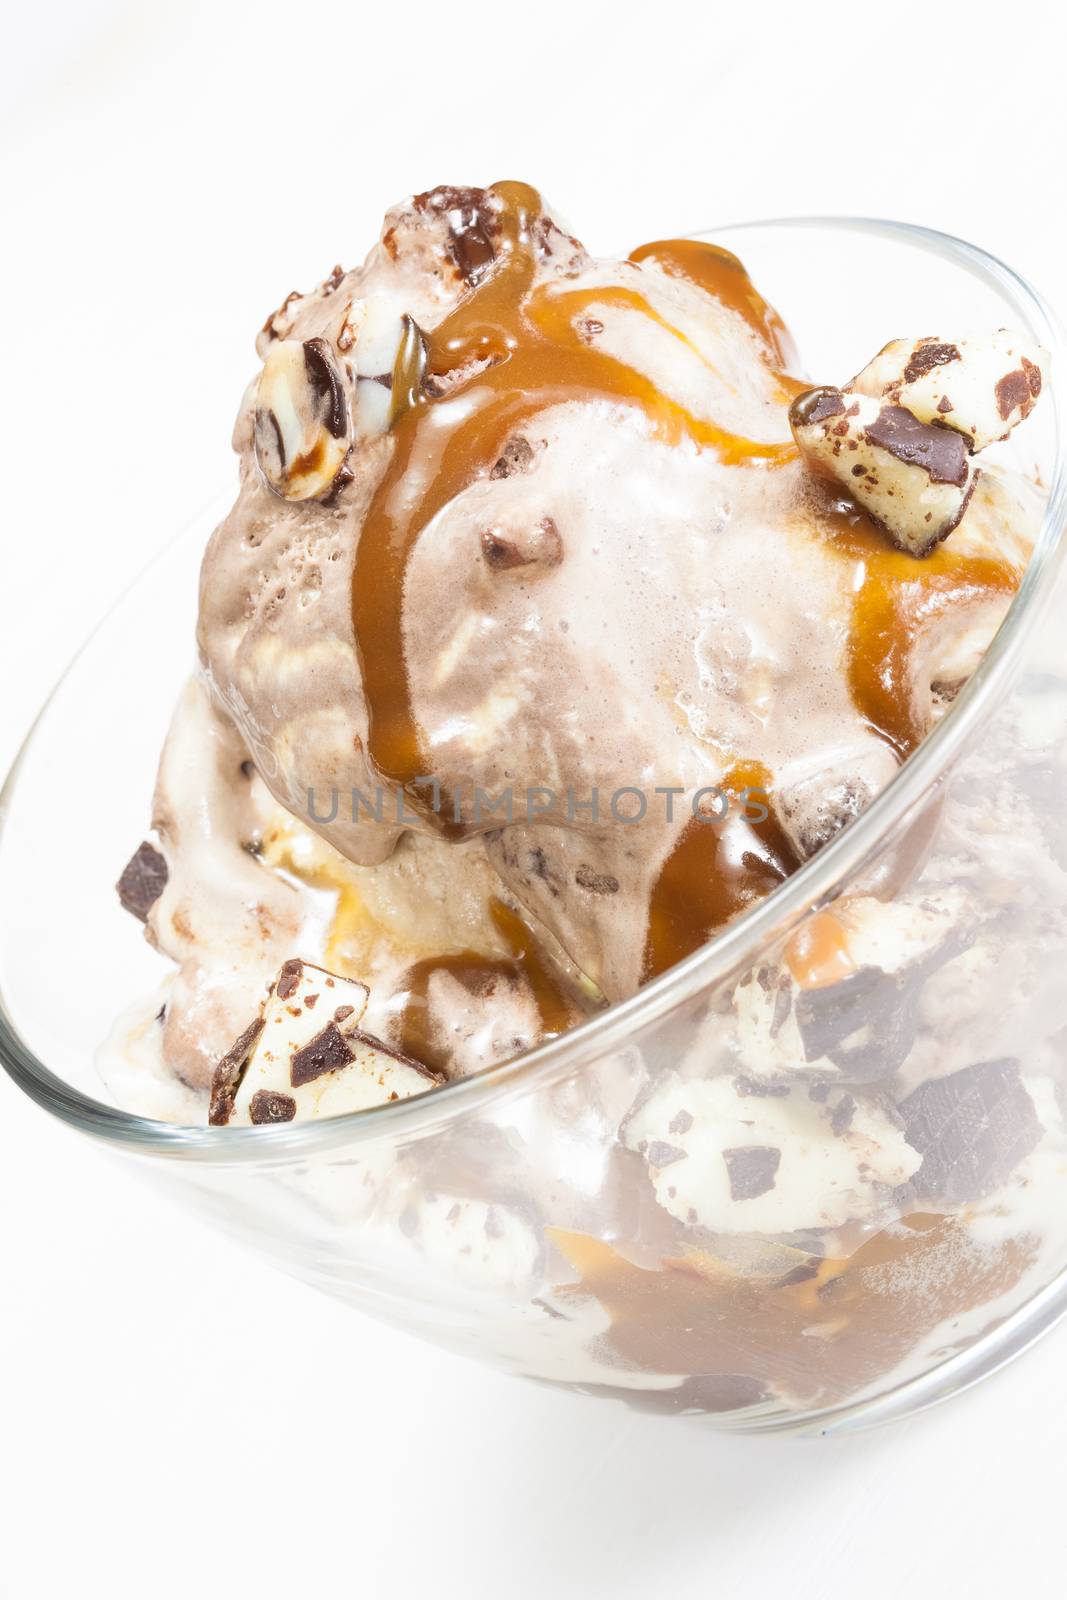 Ice Cream Sundae by Slast20